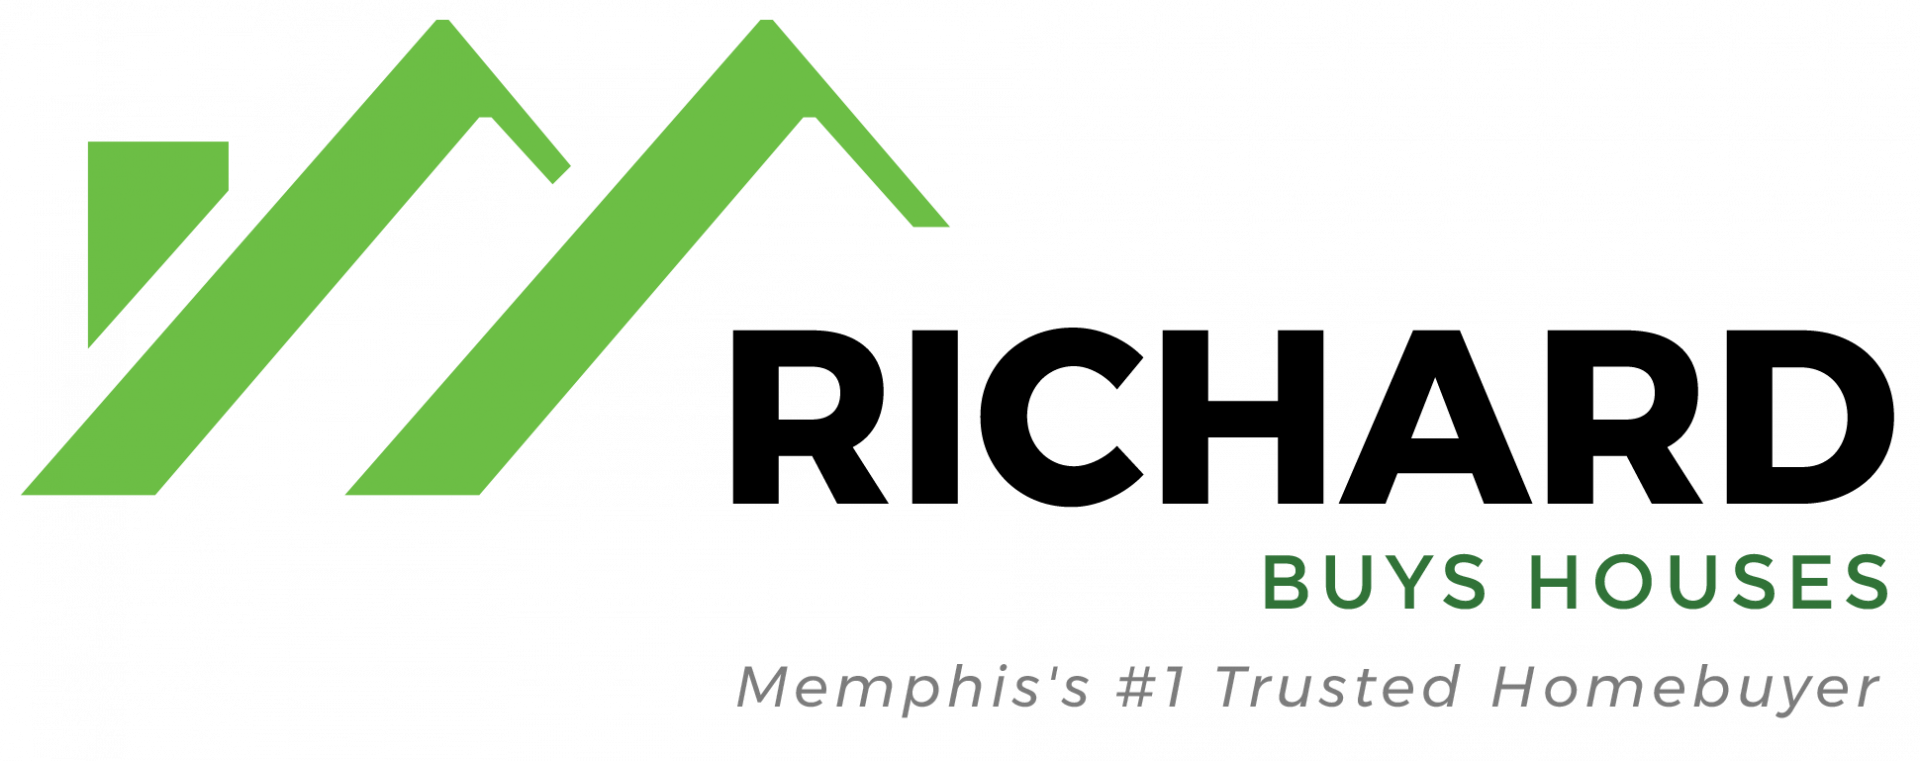 Richard Buys Houses  logo